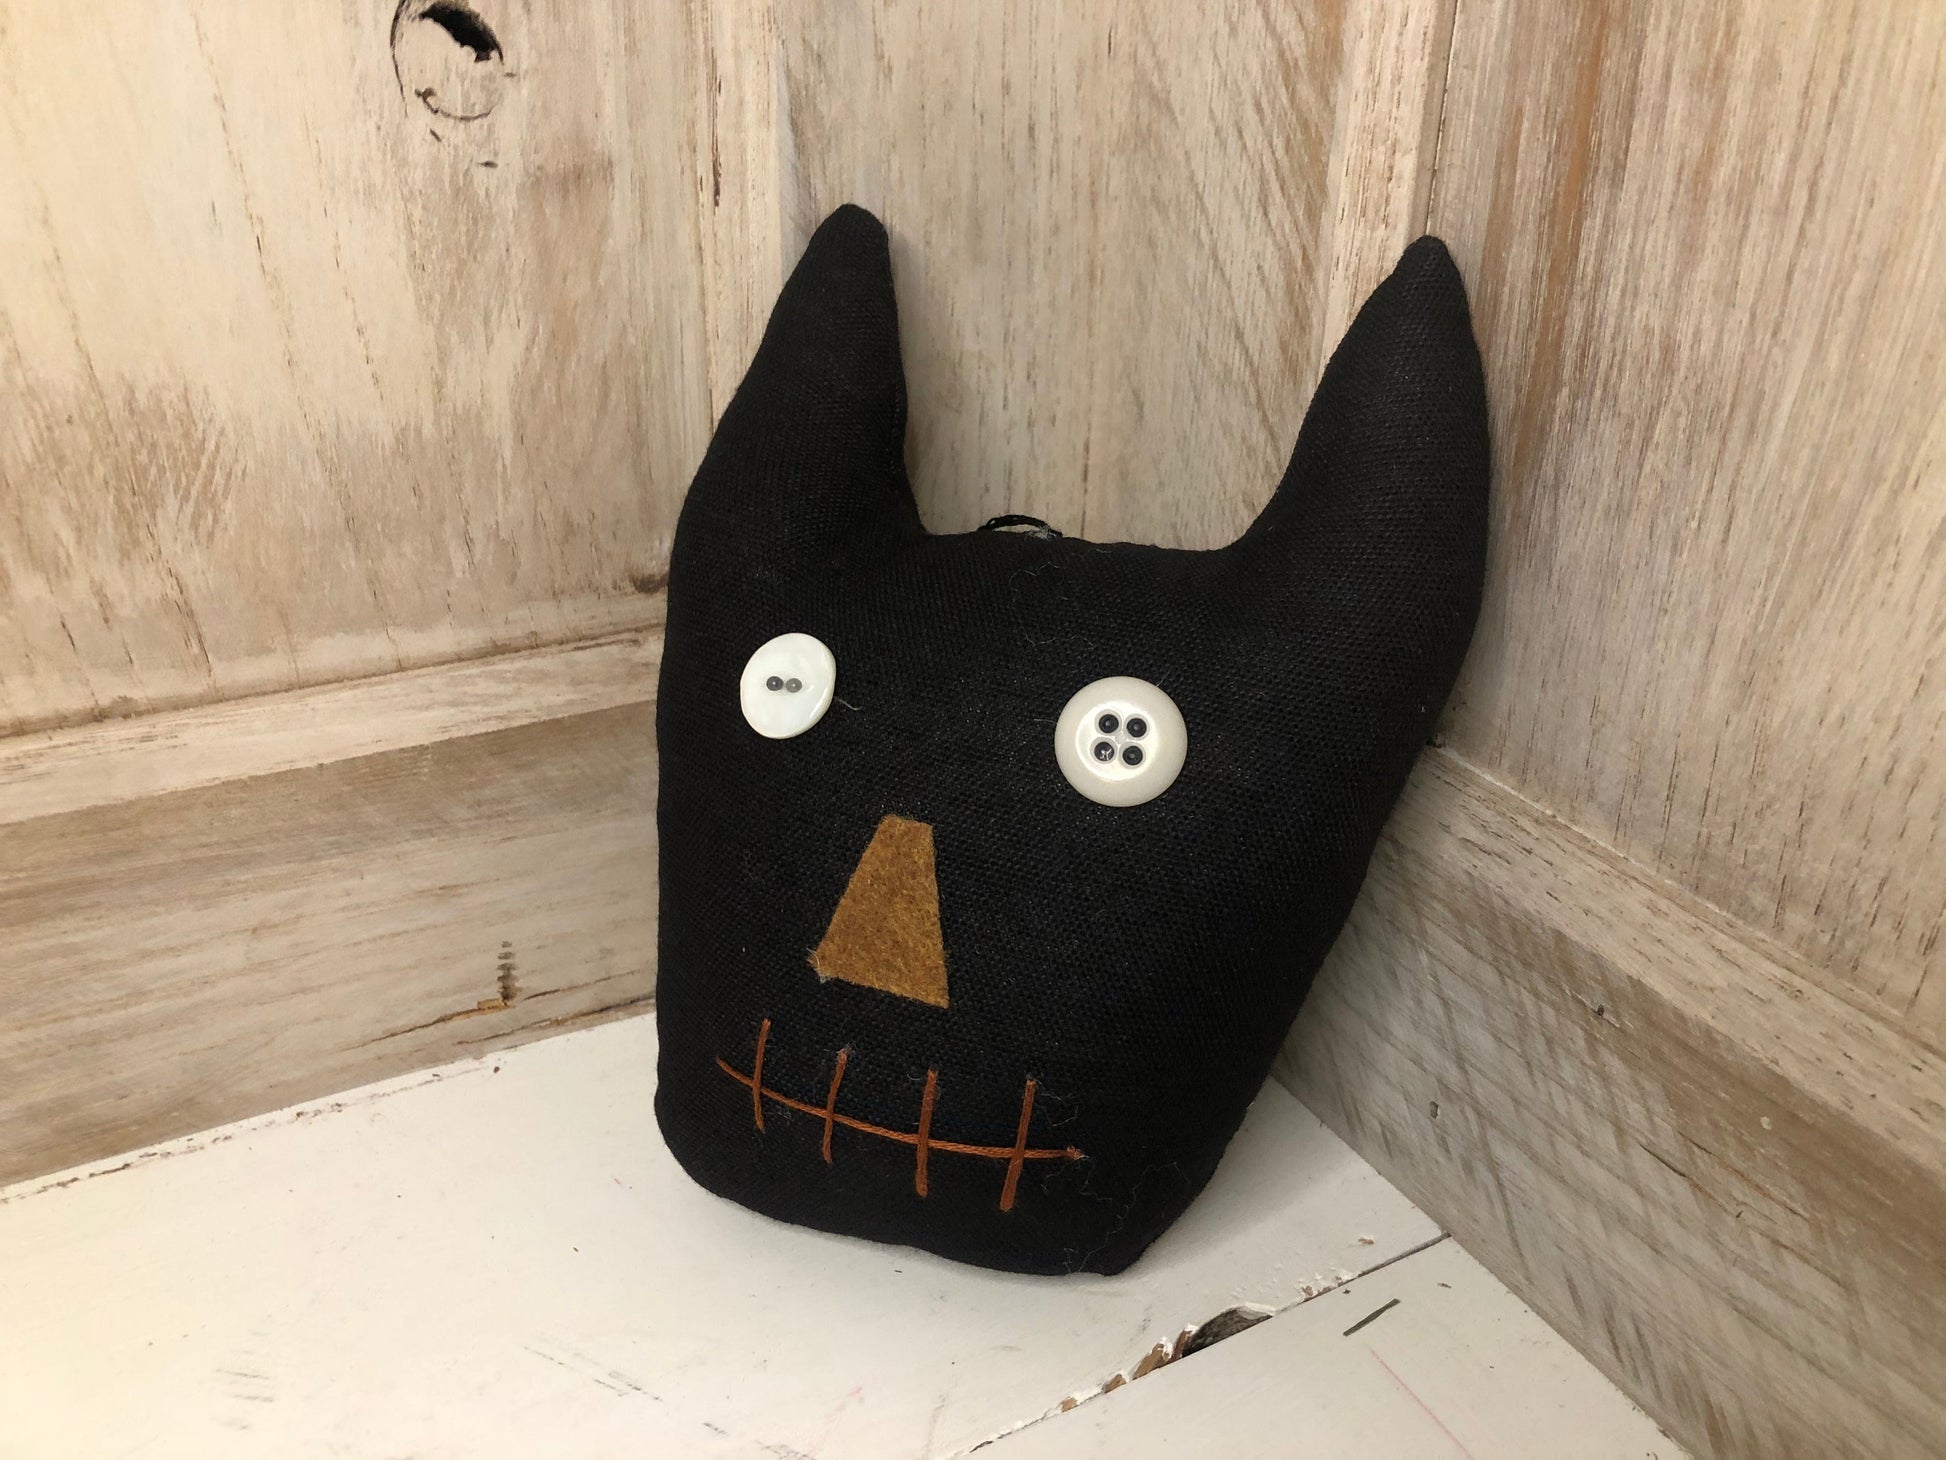 Decor Black Stuffed Cat- Hand sewn Halloween or Year Round Decor Sassafras Originals